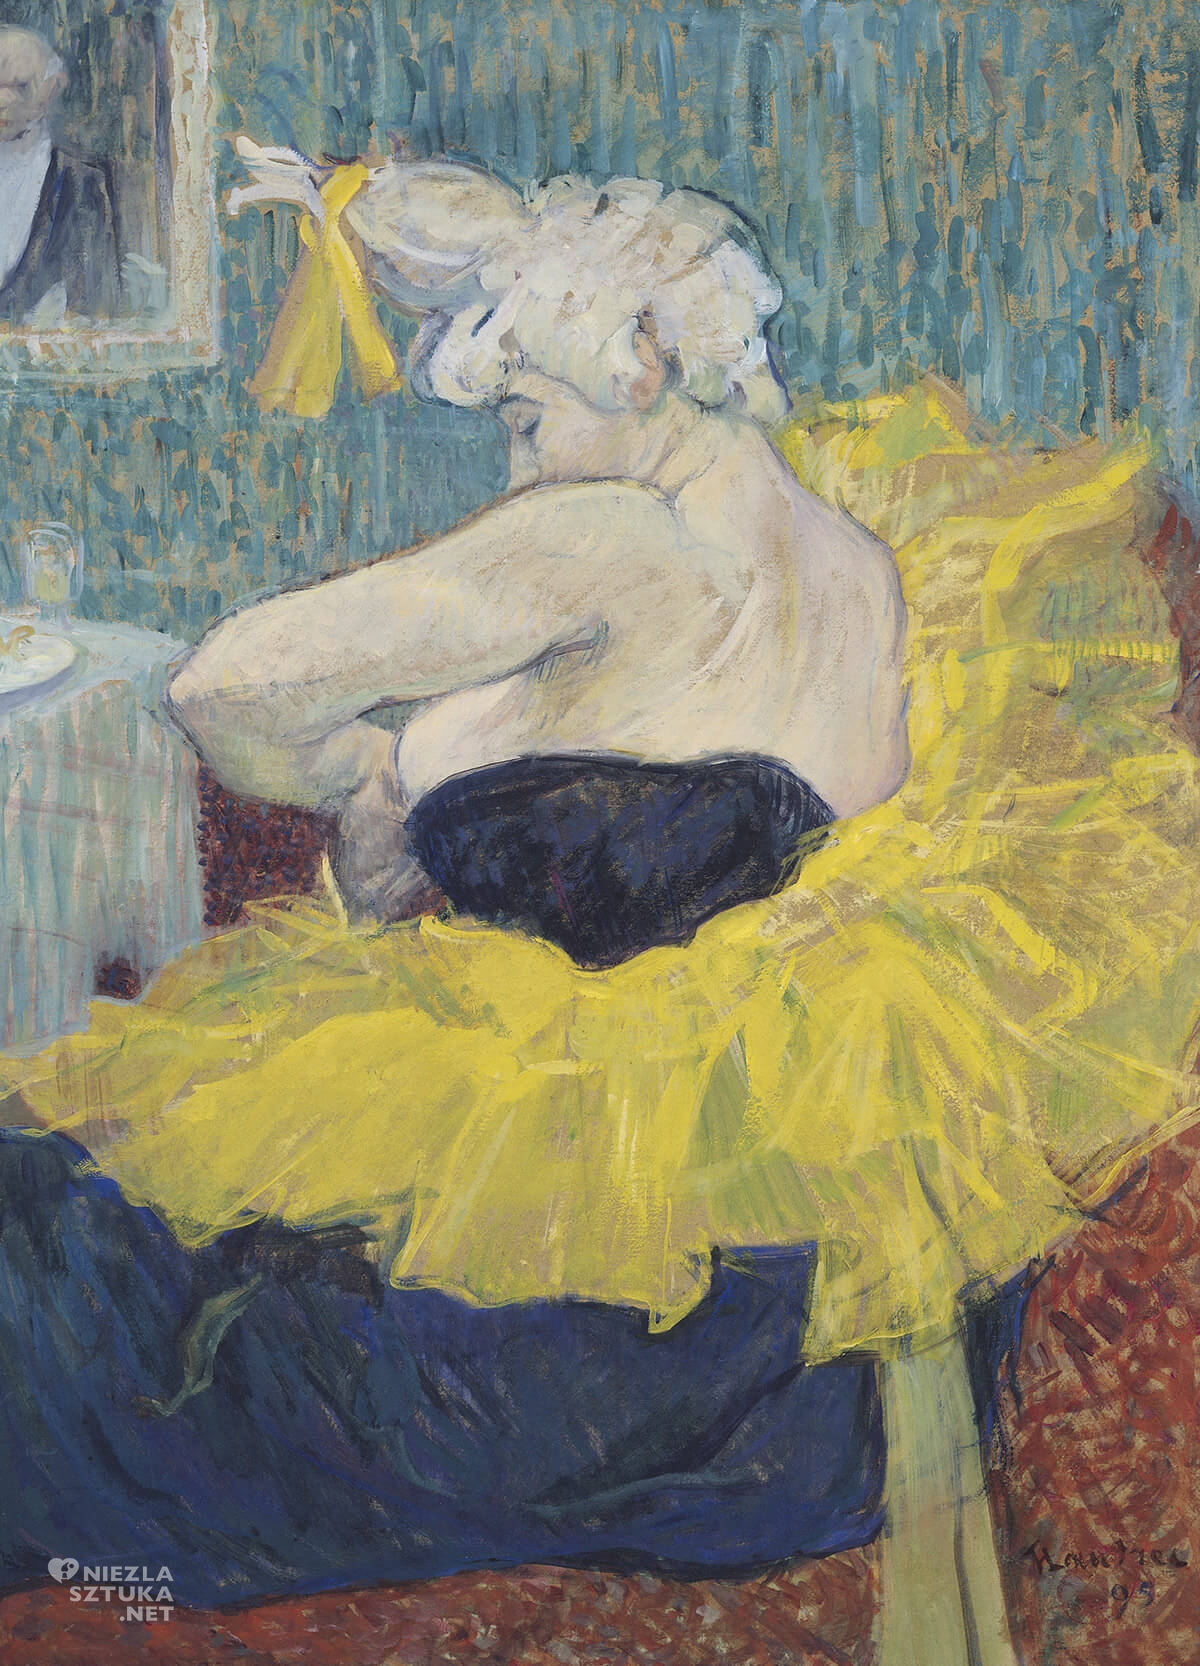 Henri de Toulouse-Lautrec, Klownessa Cha-u-Kao, Moulin Rouge, niezła sztuka